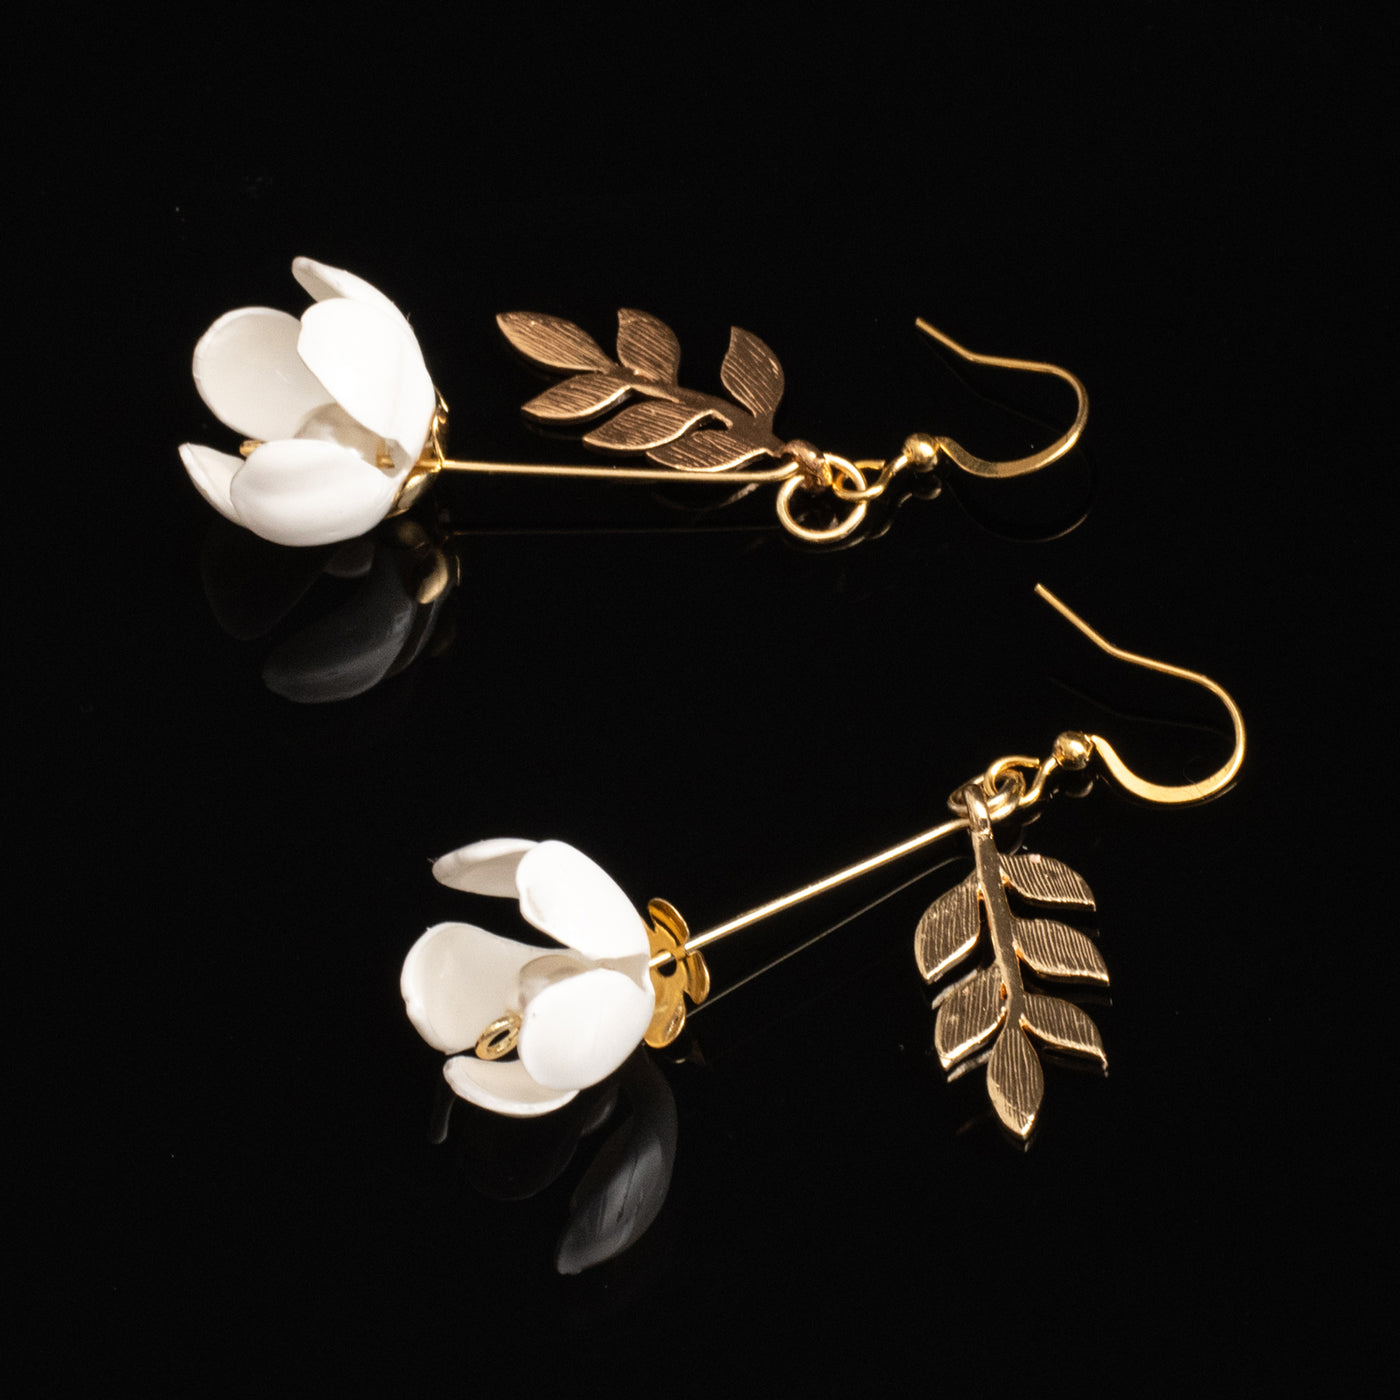 Just a Flower Earrings - White